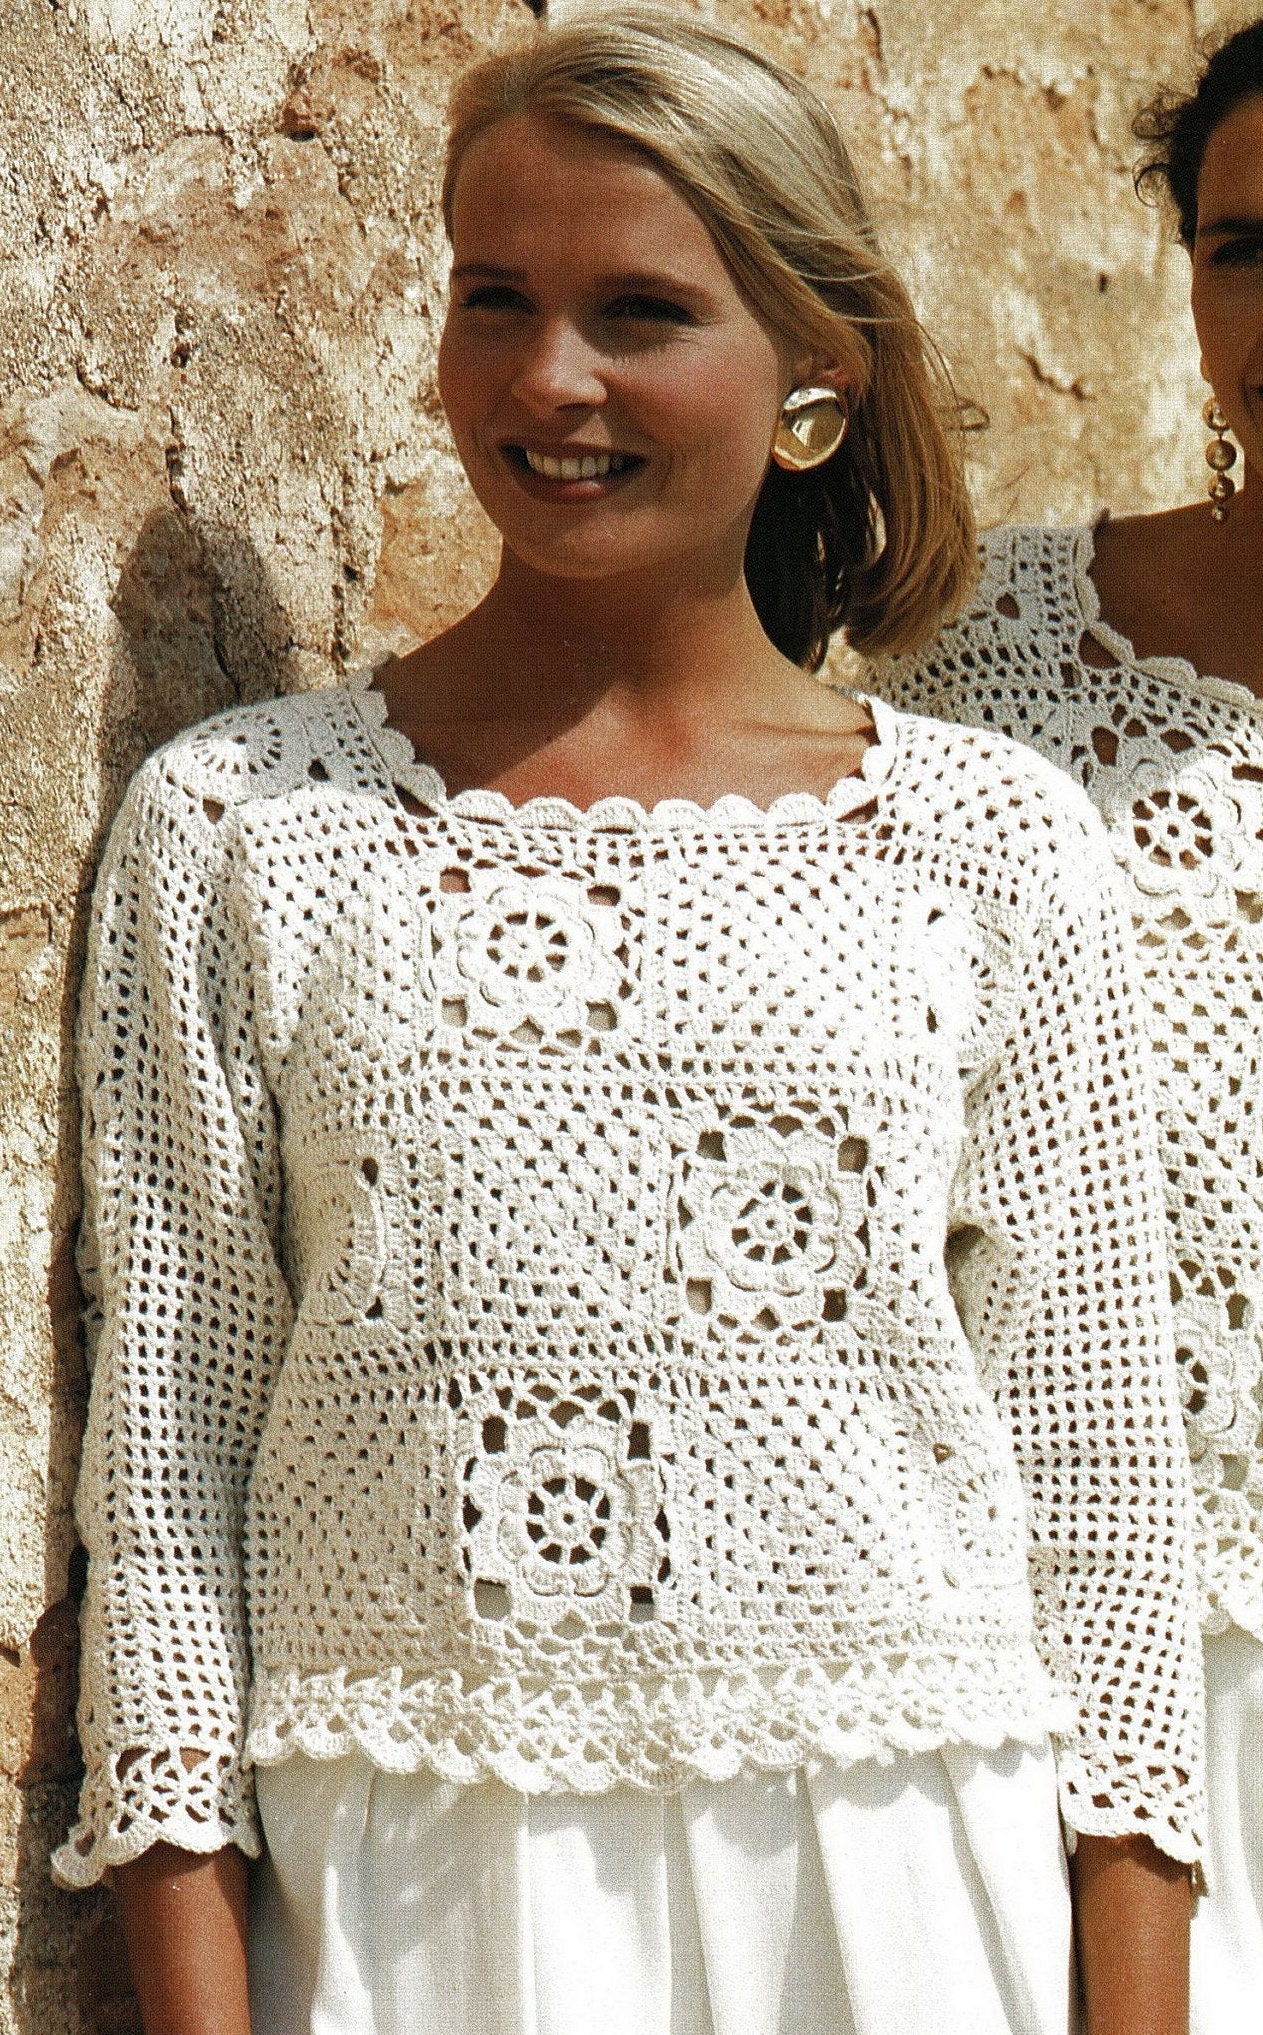 Ladies Crochet Sampler Look Jacket Gilet Sweater and Top | Etsy